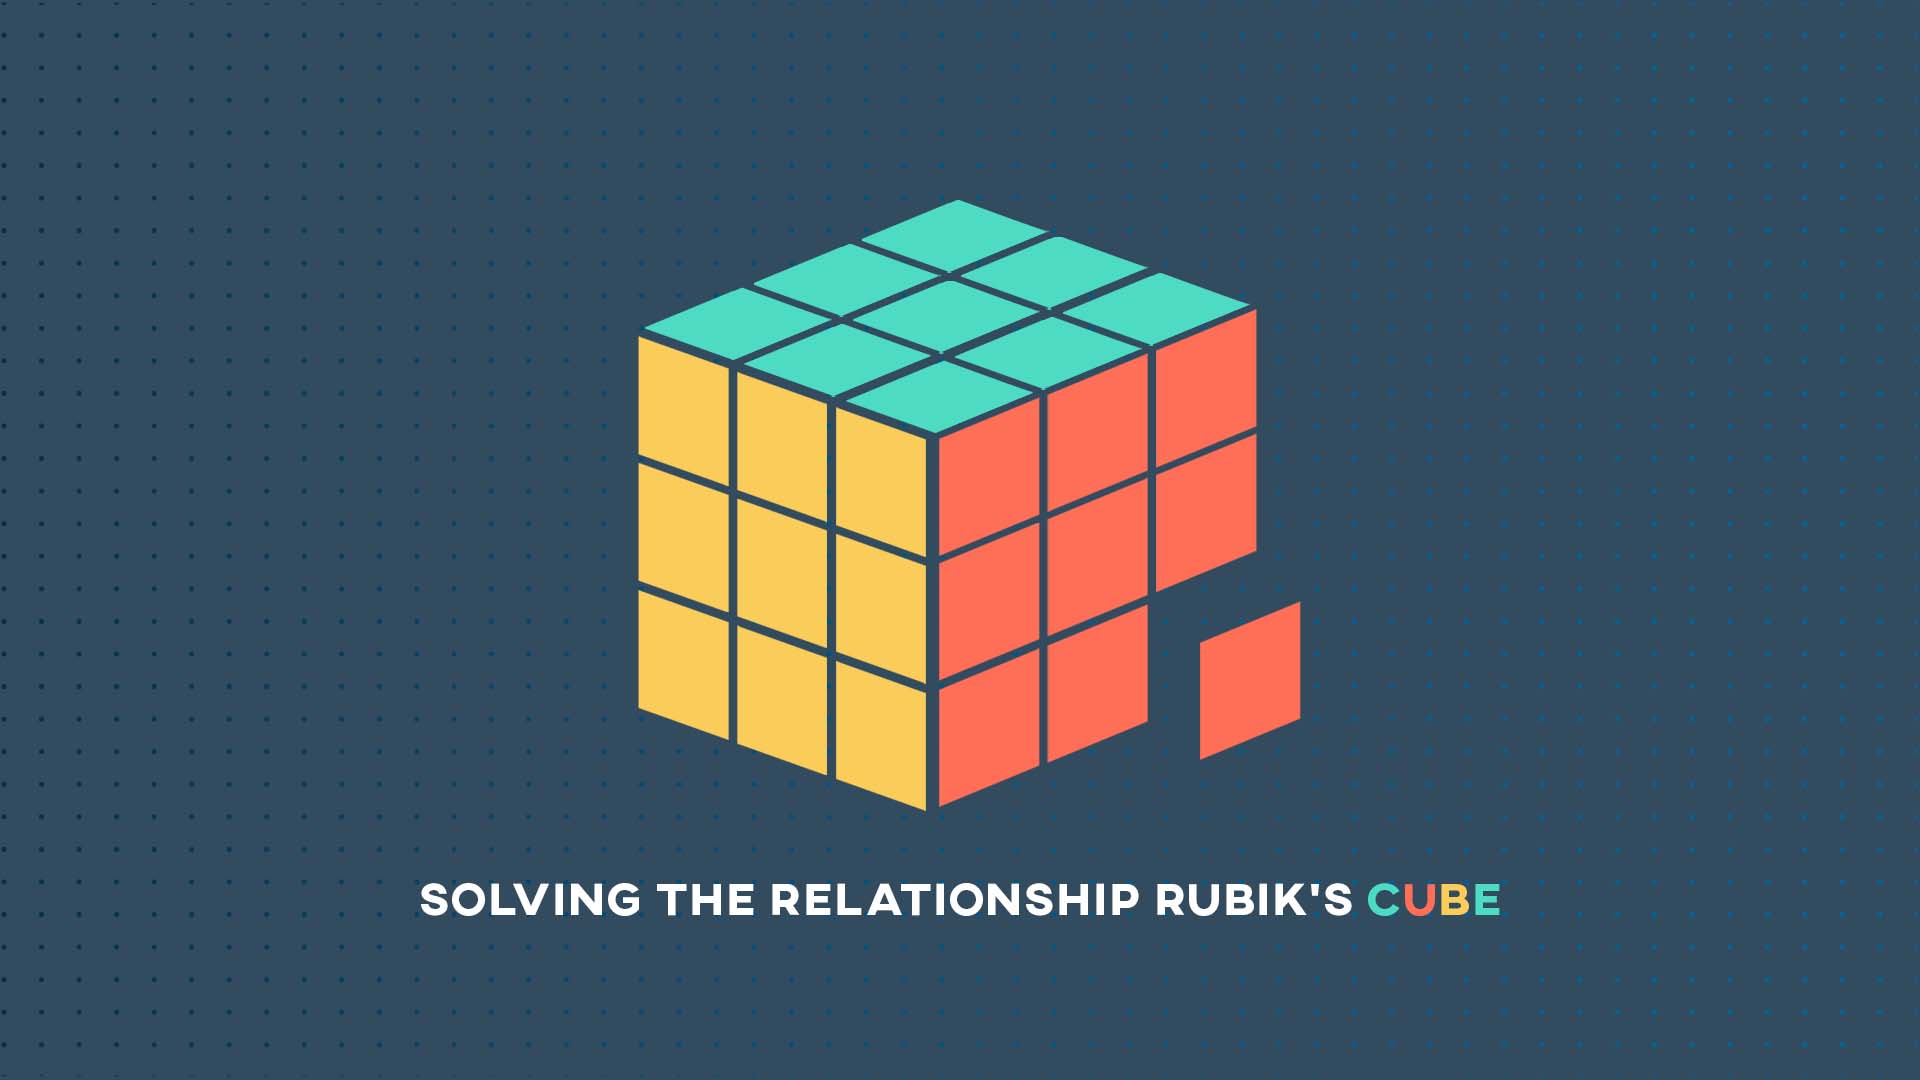 SOLVING THE RELATIONSHIP RUBIK'S CUBE